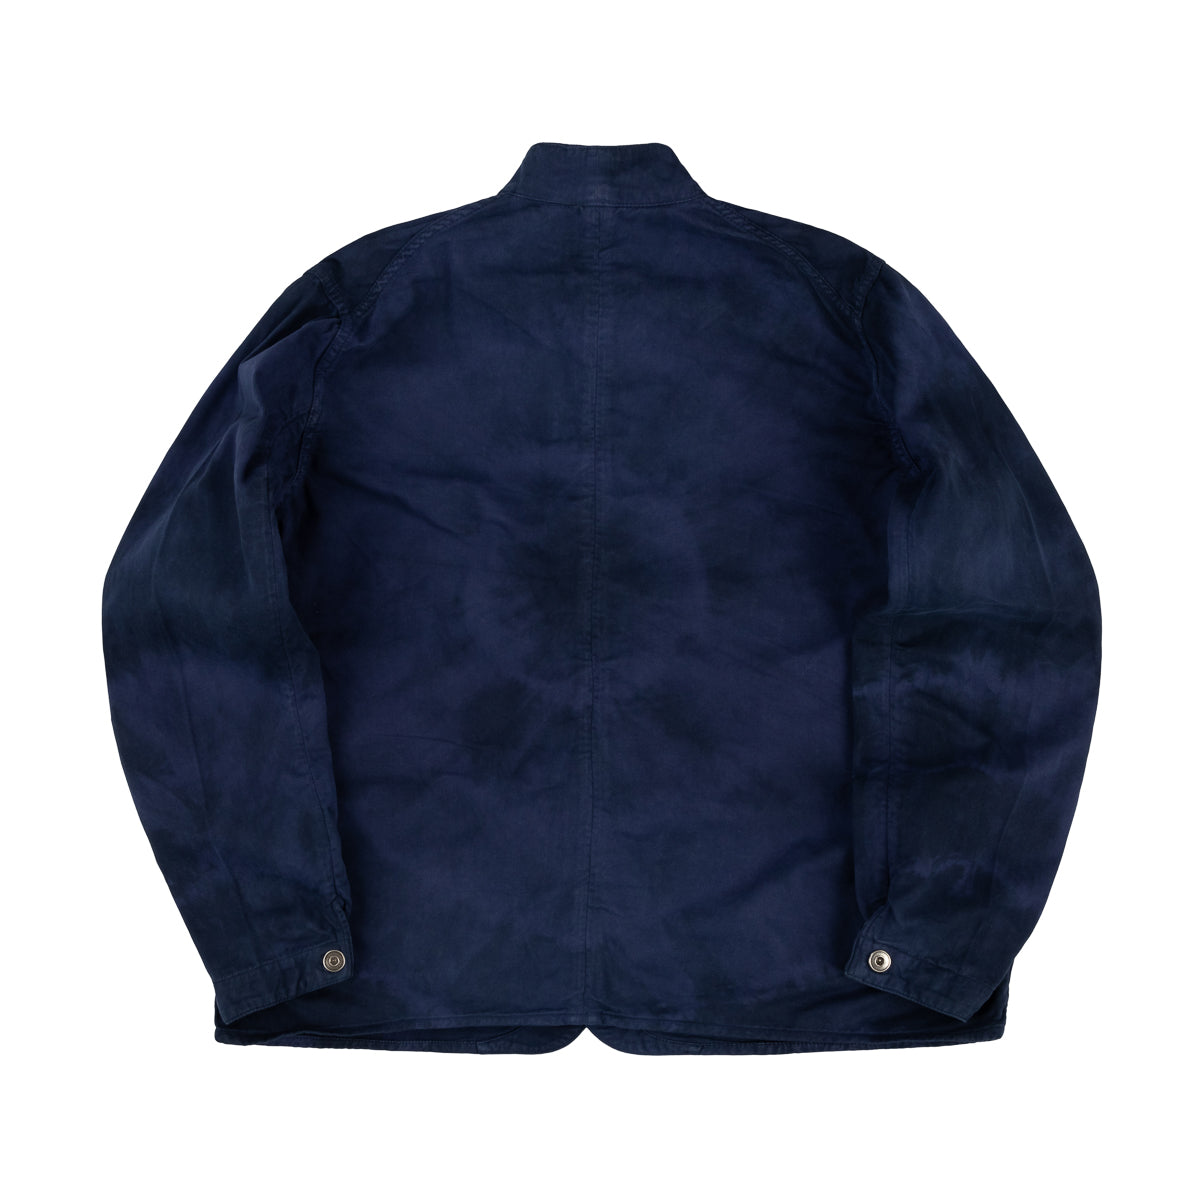 Chore jacket - Indigo Tie Dye